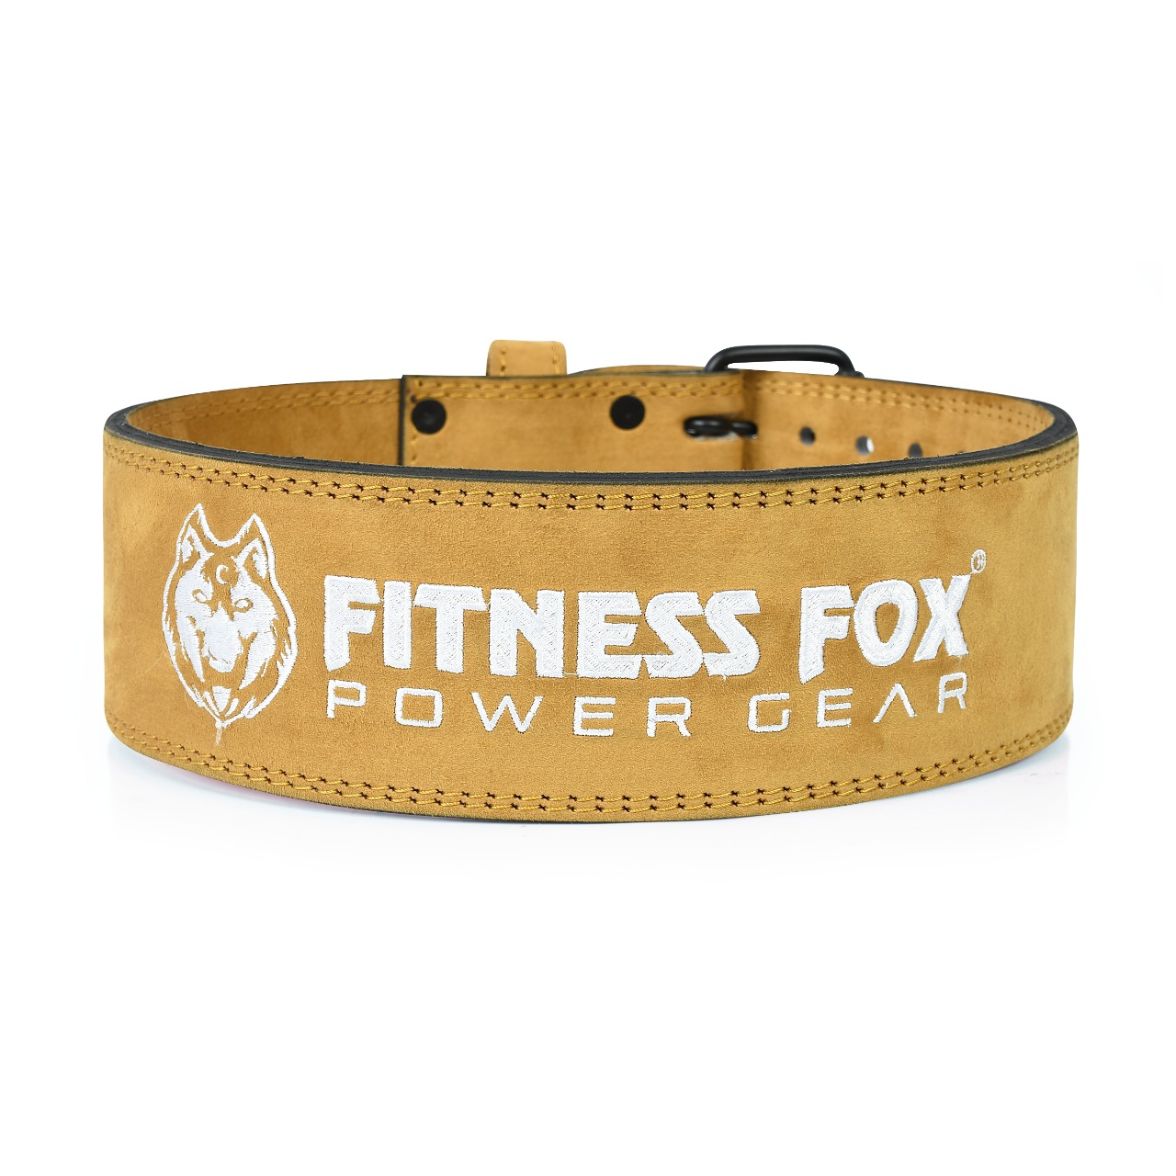 FITNESS FOX 10mm Single Prong Powerlifting Belt (Skin)